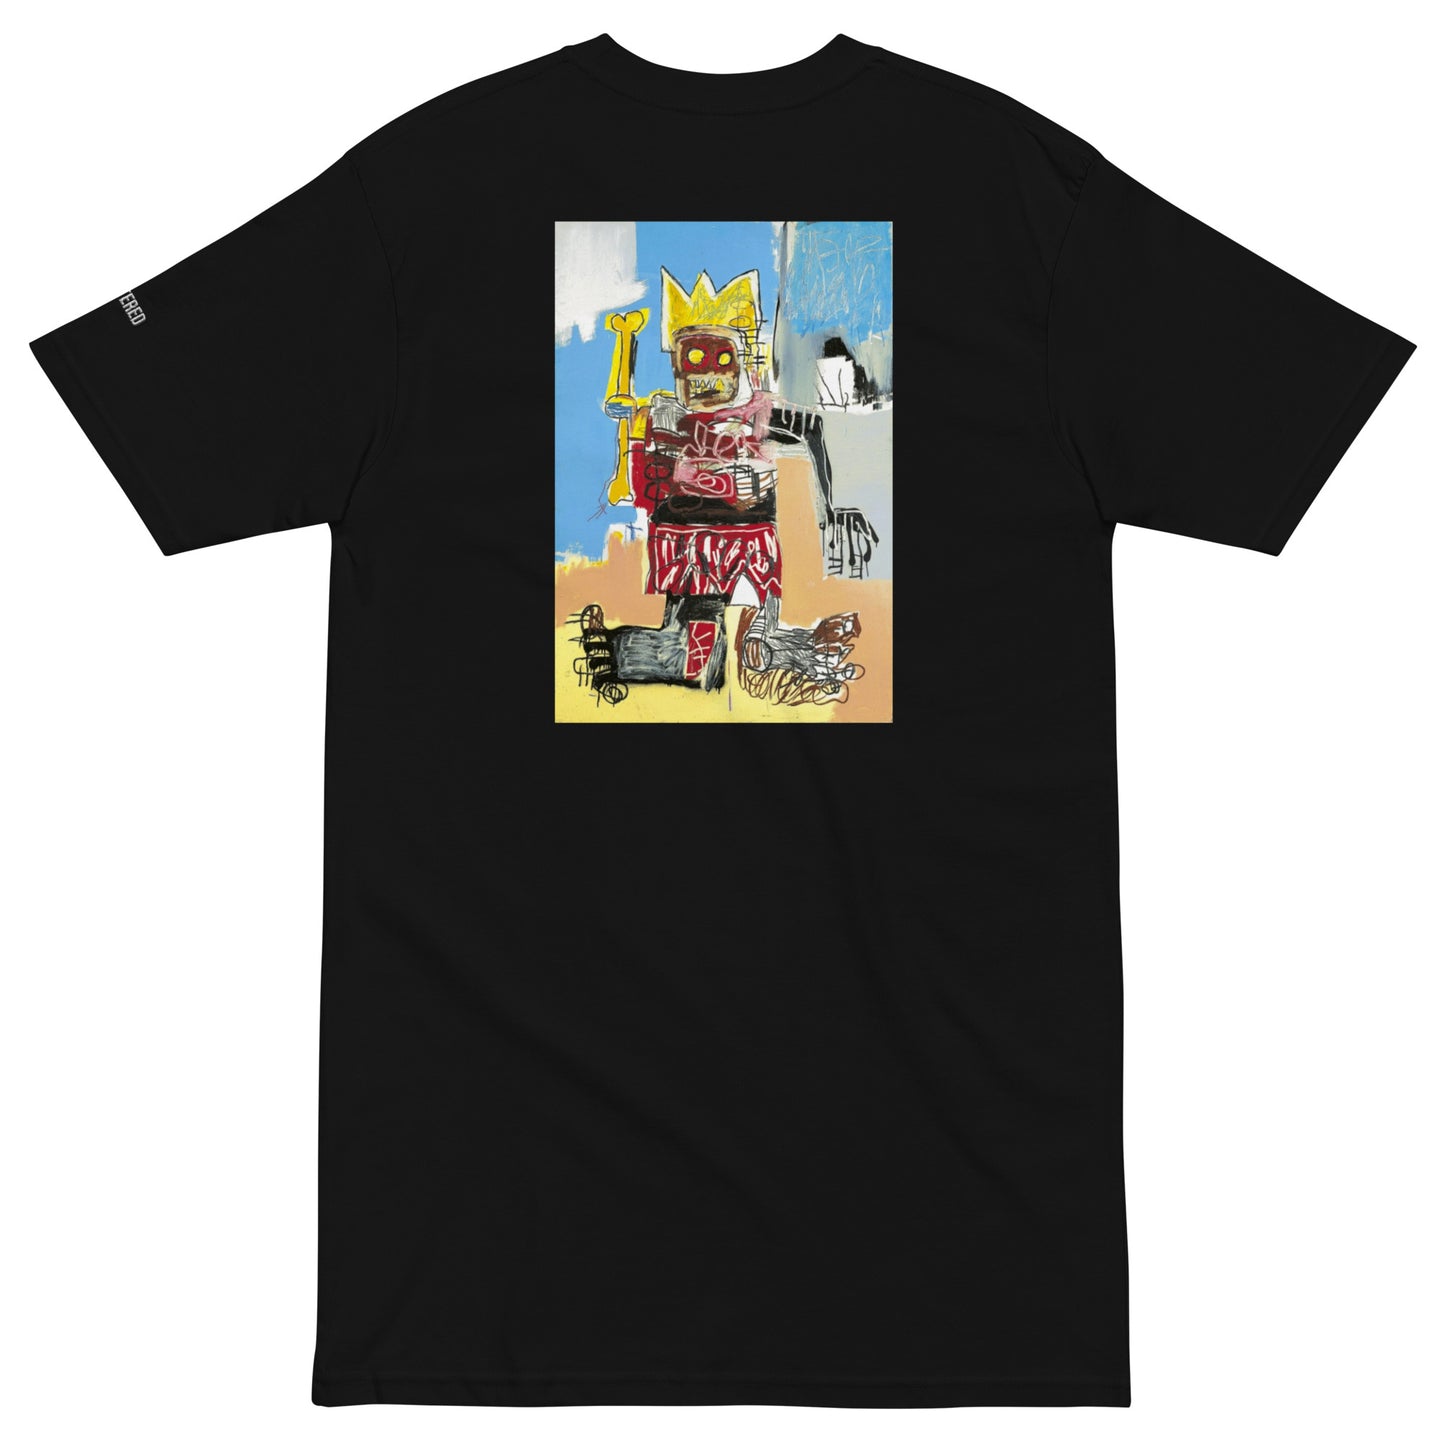 Jean-Michel Basquiat "Untitled" Artwork Embroidered + Printed Premium Black Streetwear T-shirt SCattered